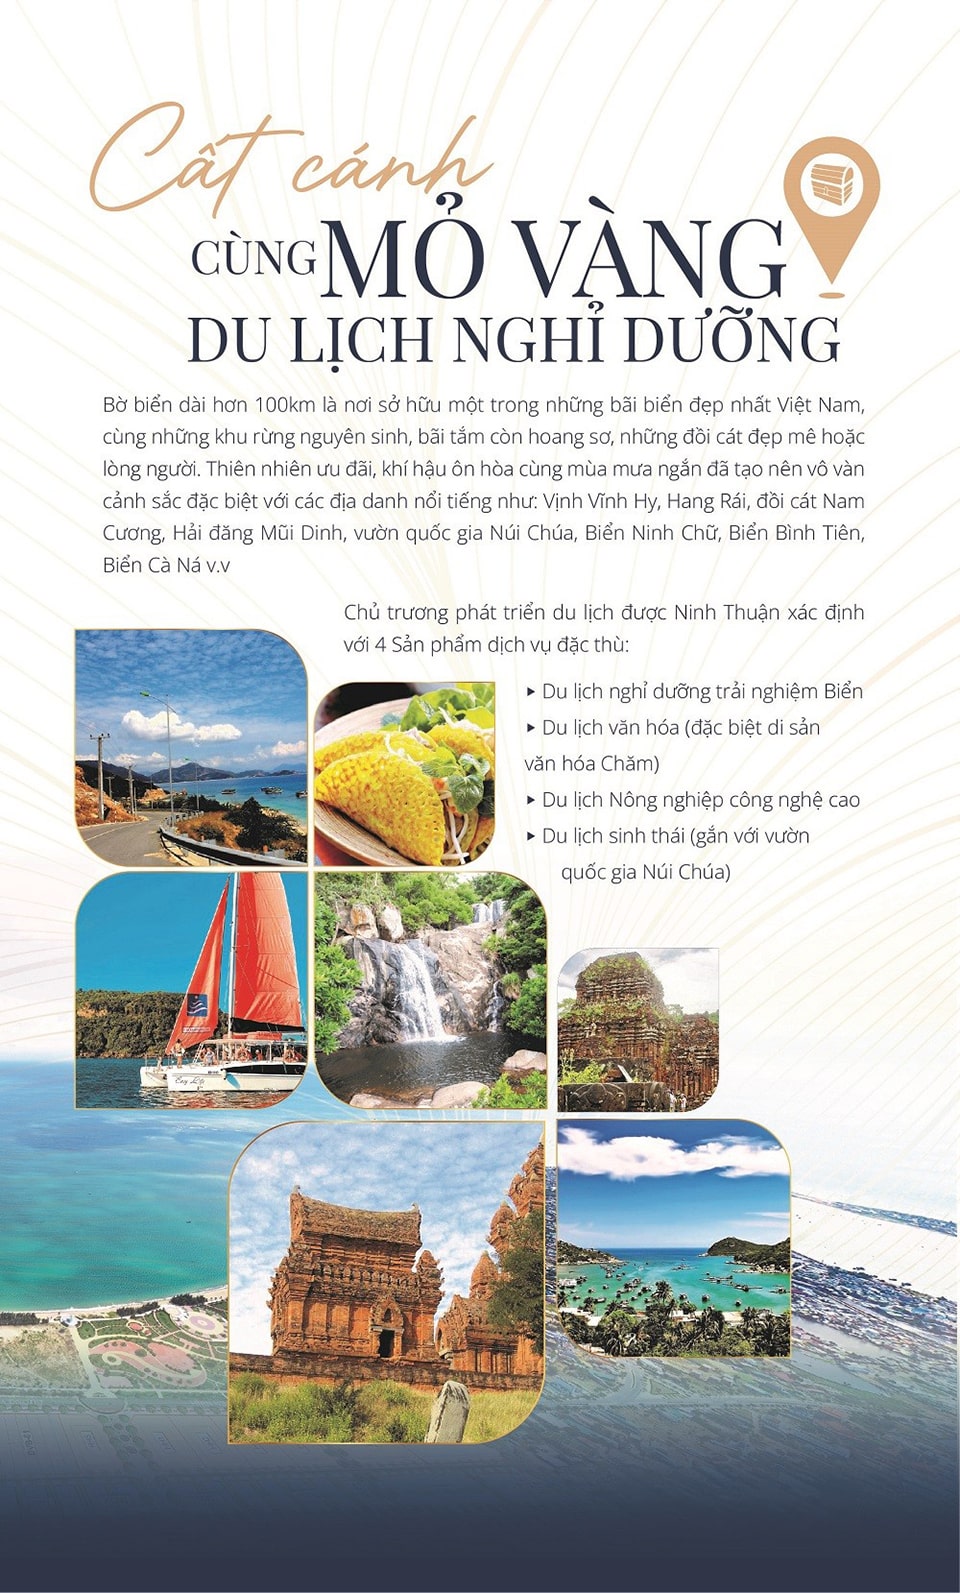 Bình Sơn Ocean Park Ninh Thuận